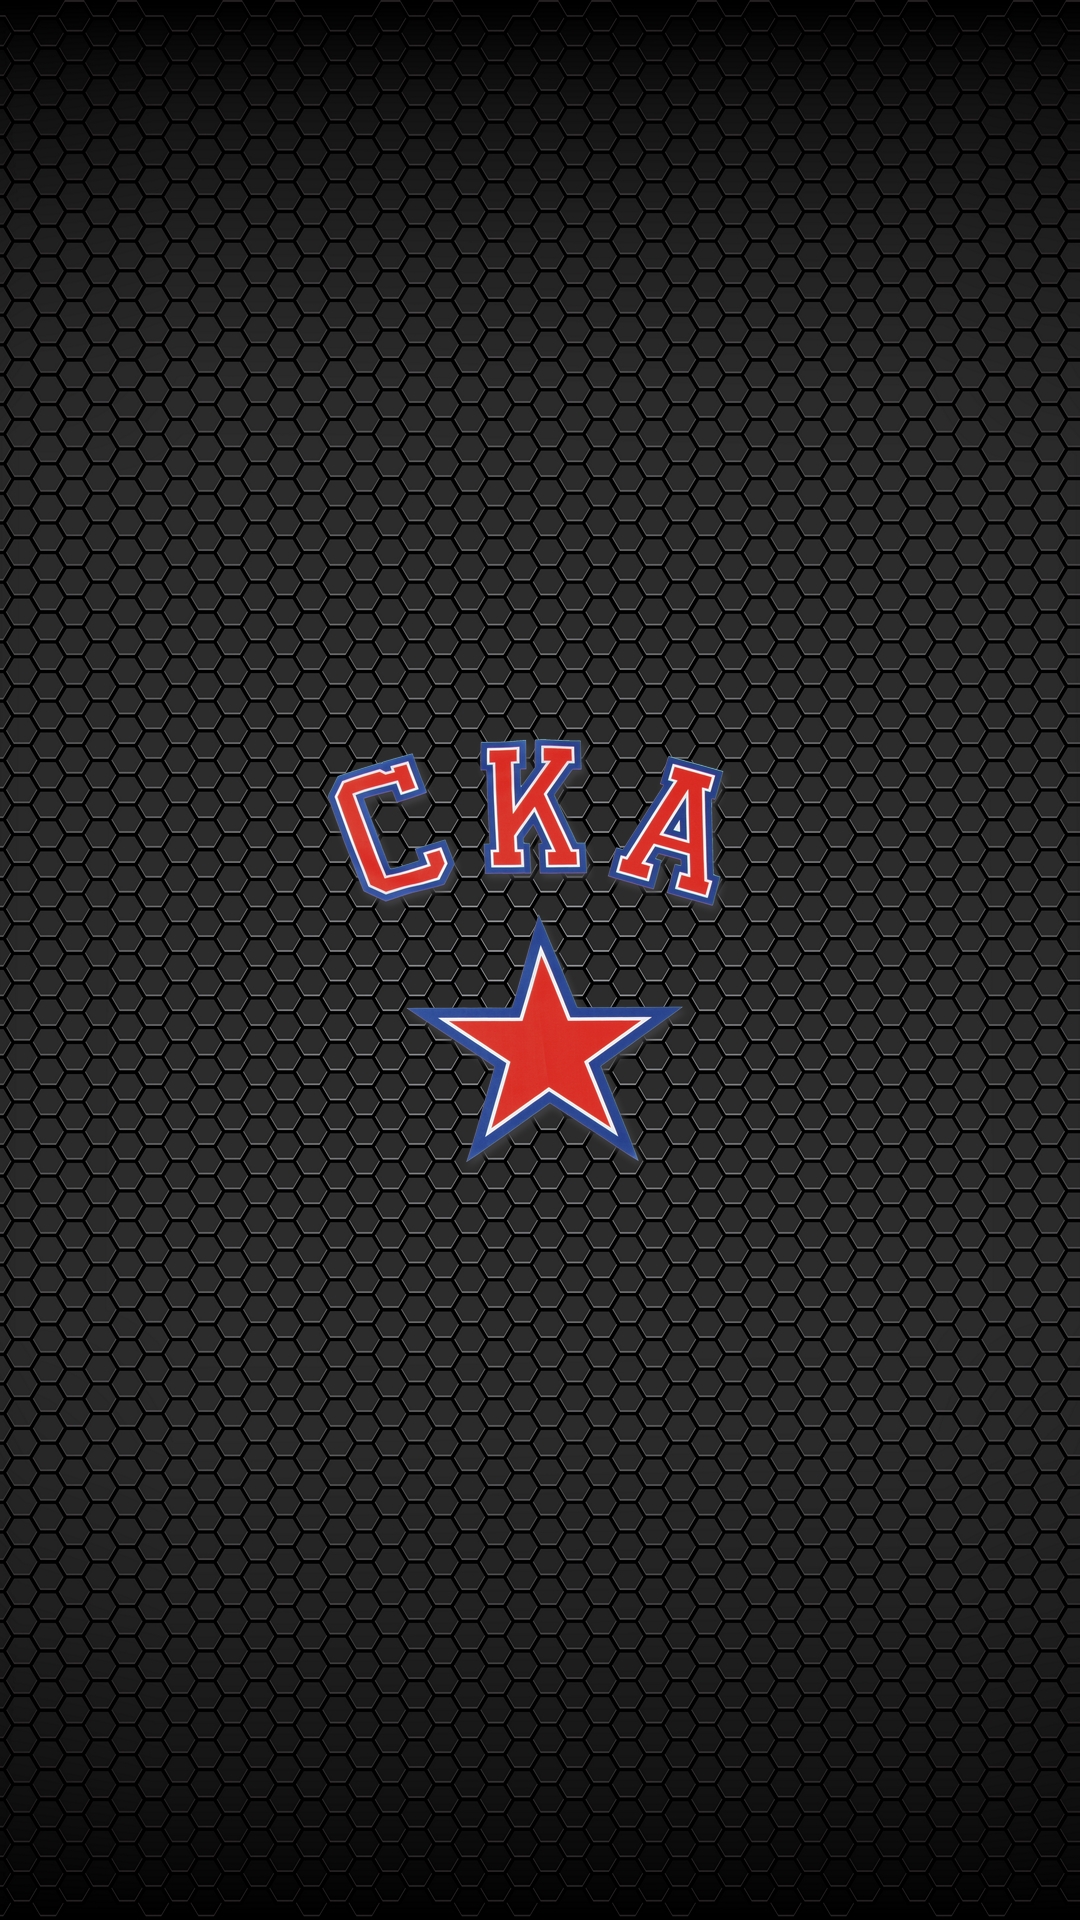 Обои на телефон хк. СКА. СКА логотип. Хк СКА логотип. Хк СКА обои на телефон.